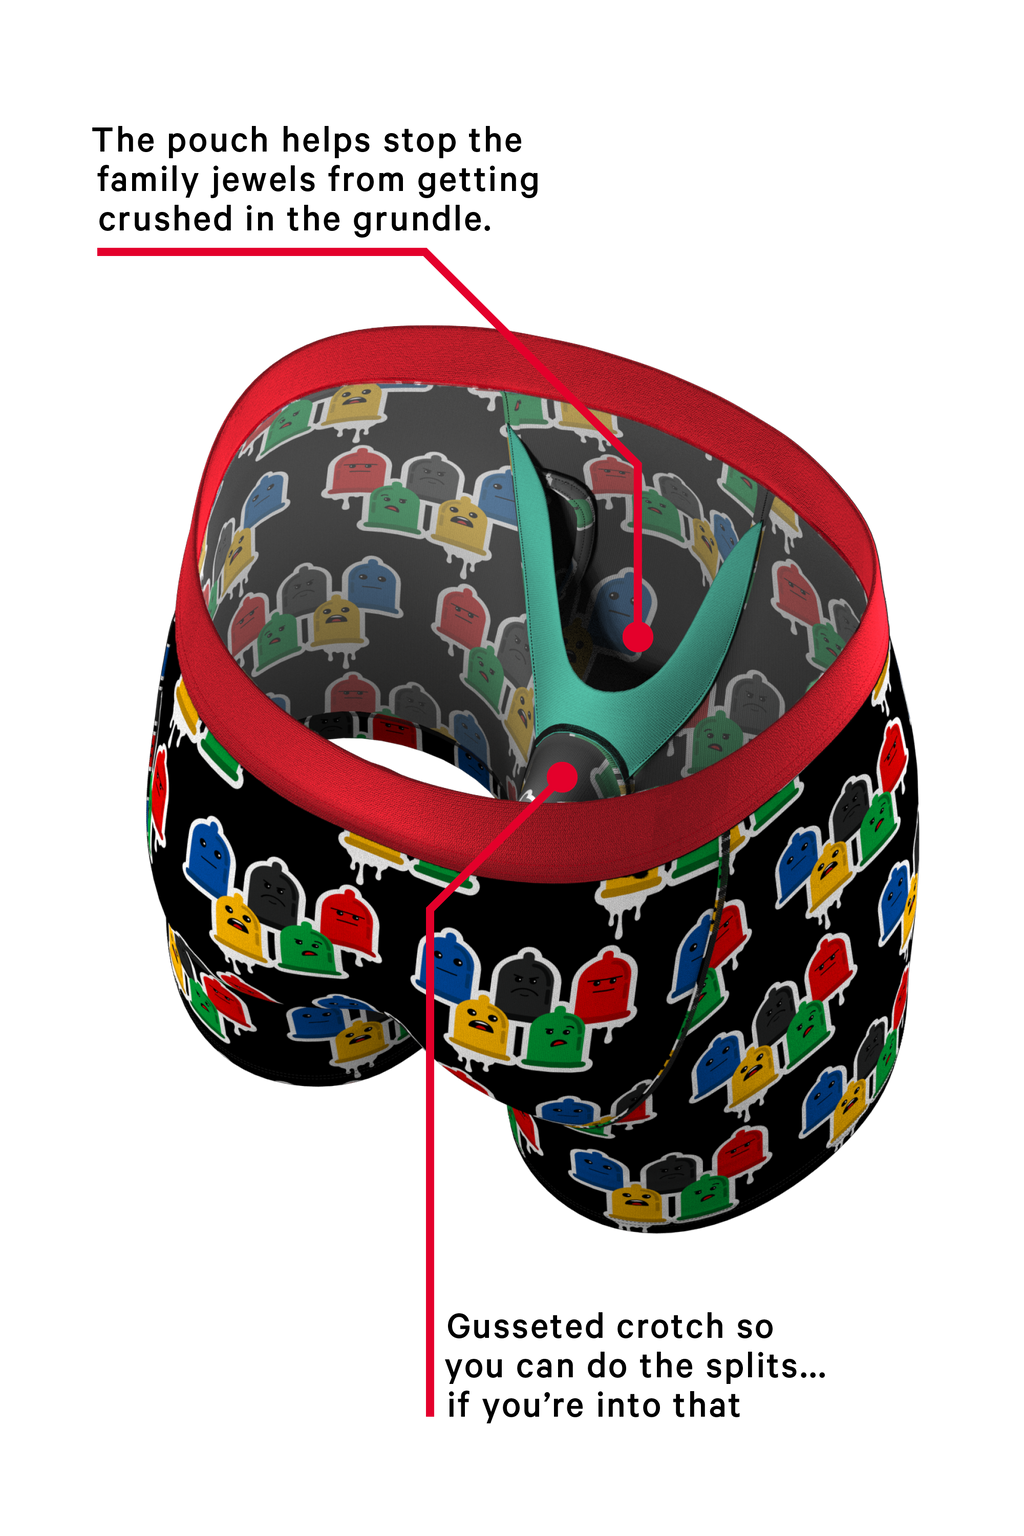 Colorful condom ball hammock